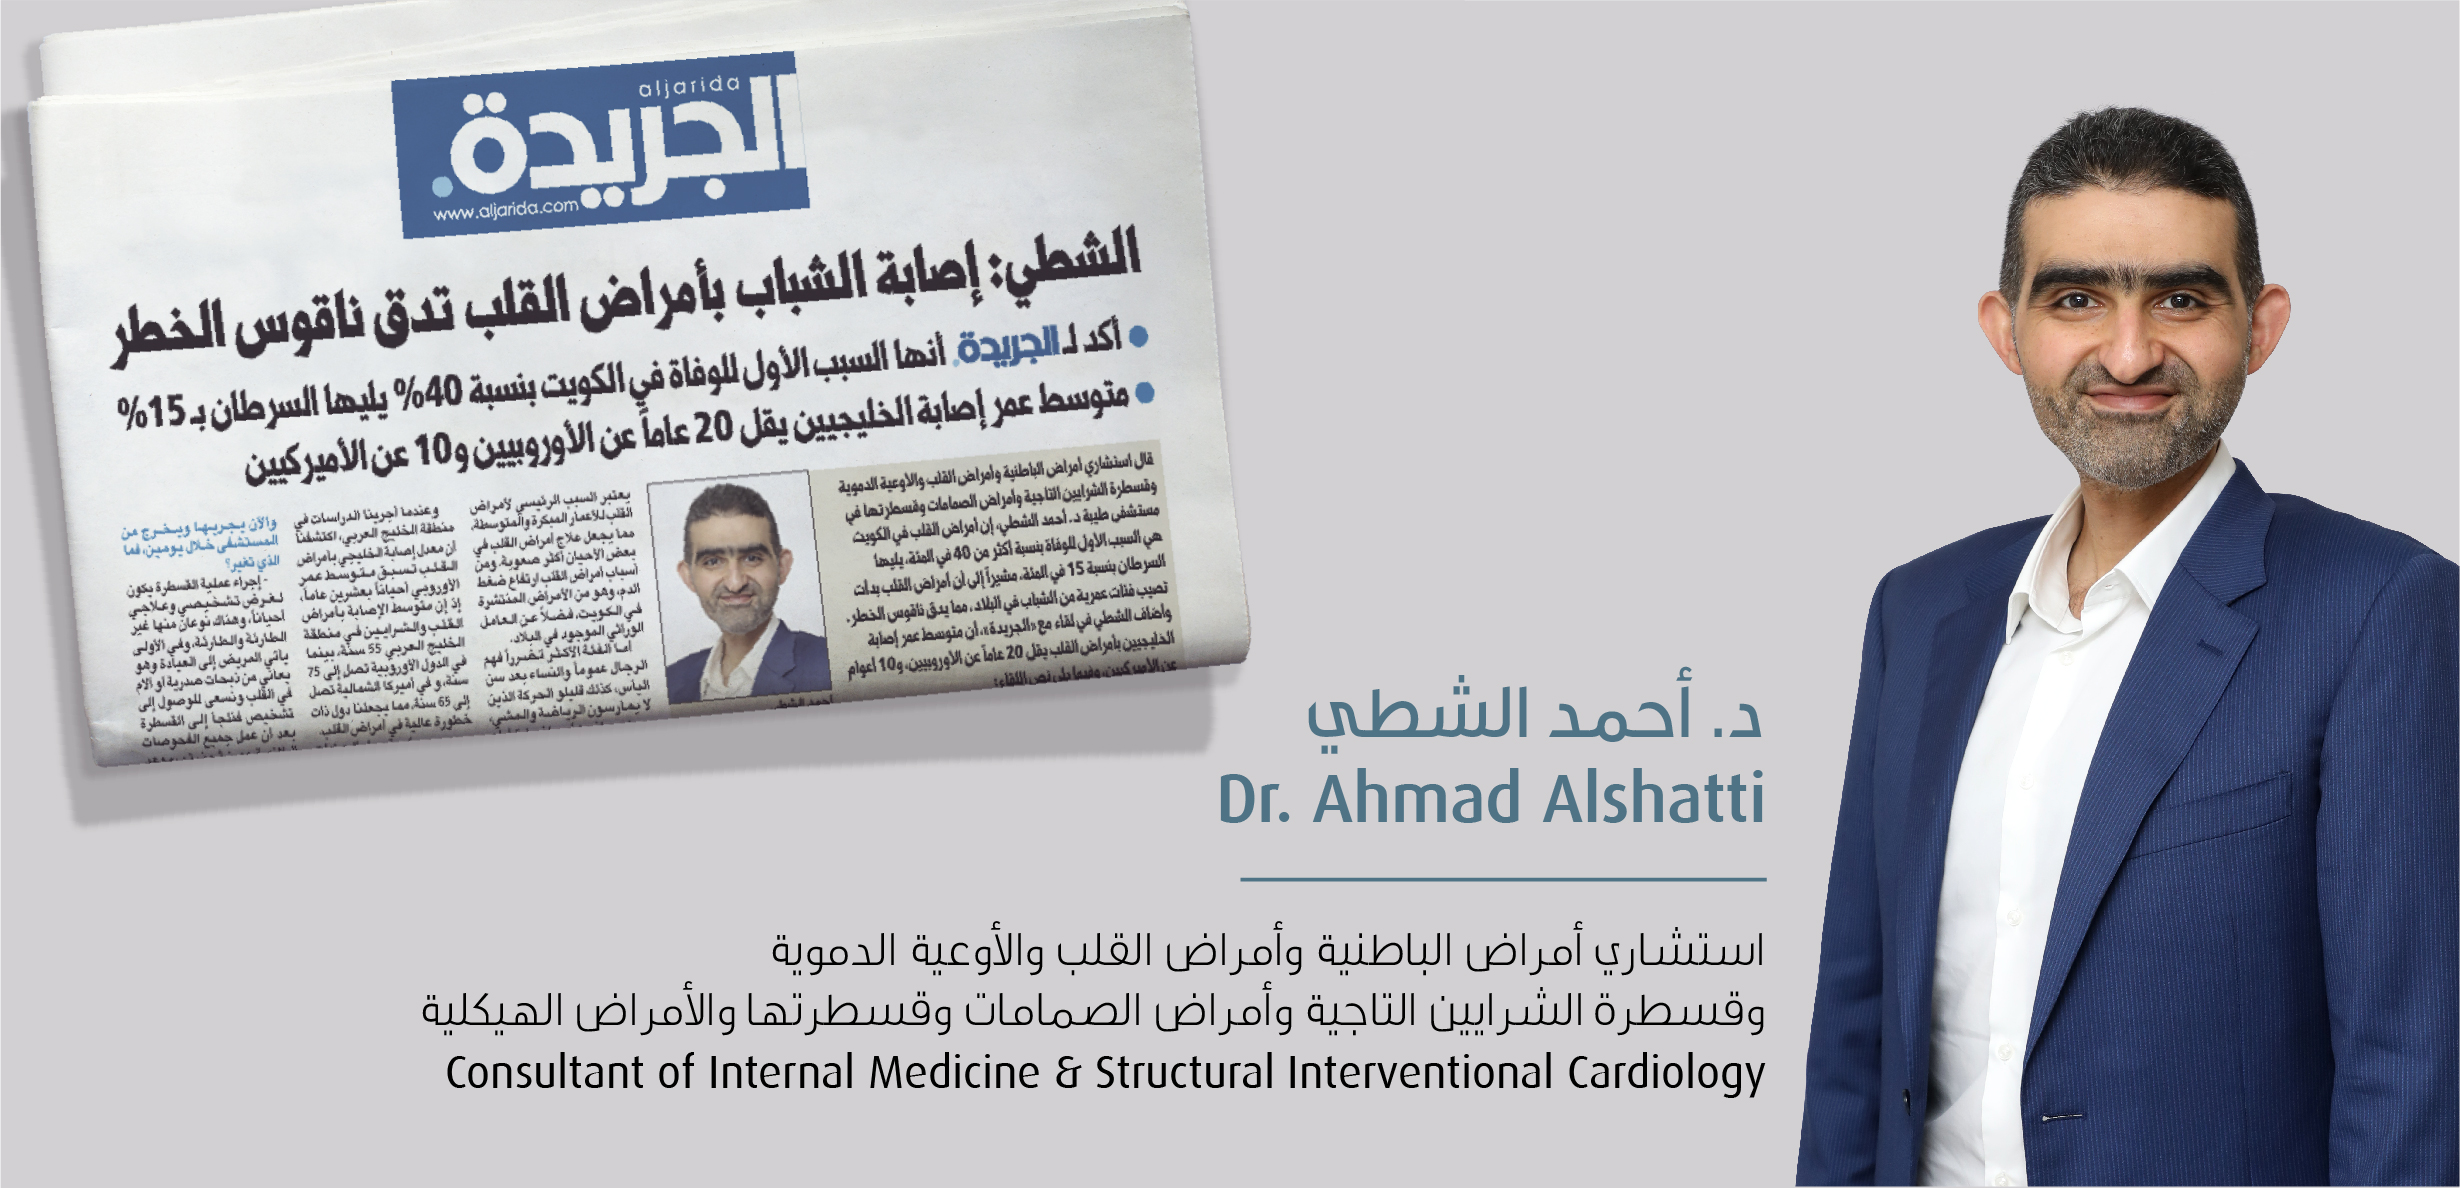 Interview with Dr. Ahmad Alshatti by Al-Jarida newspaper